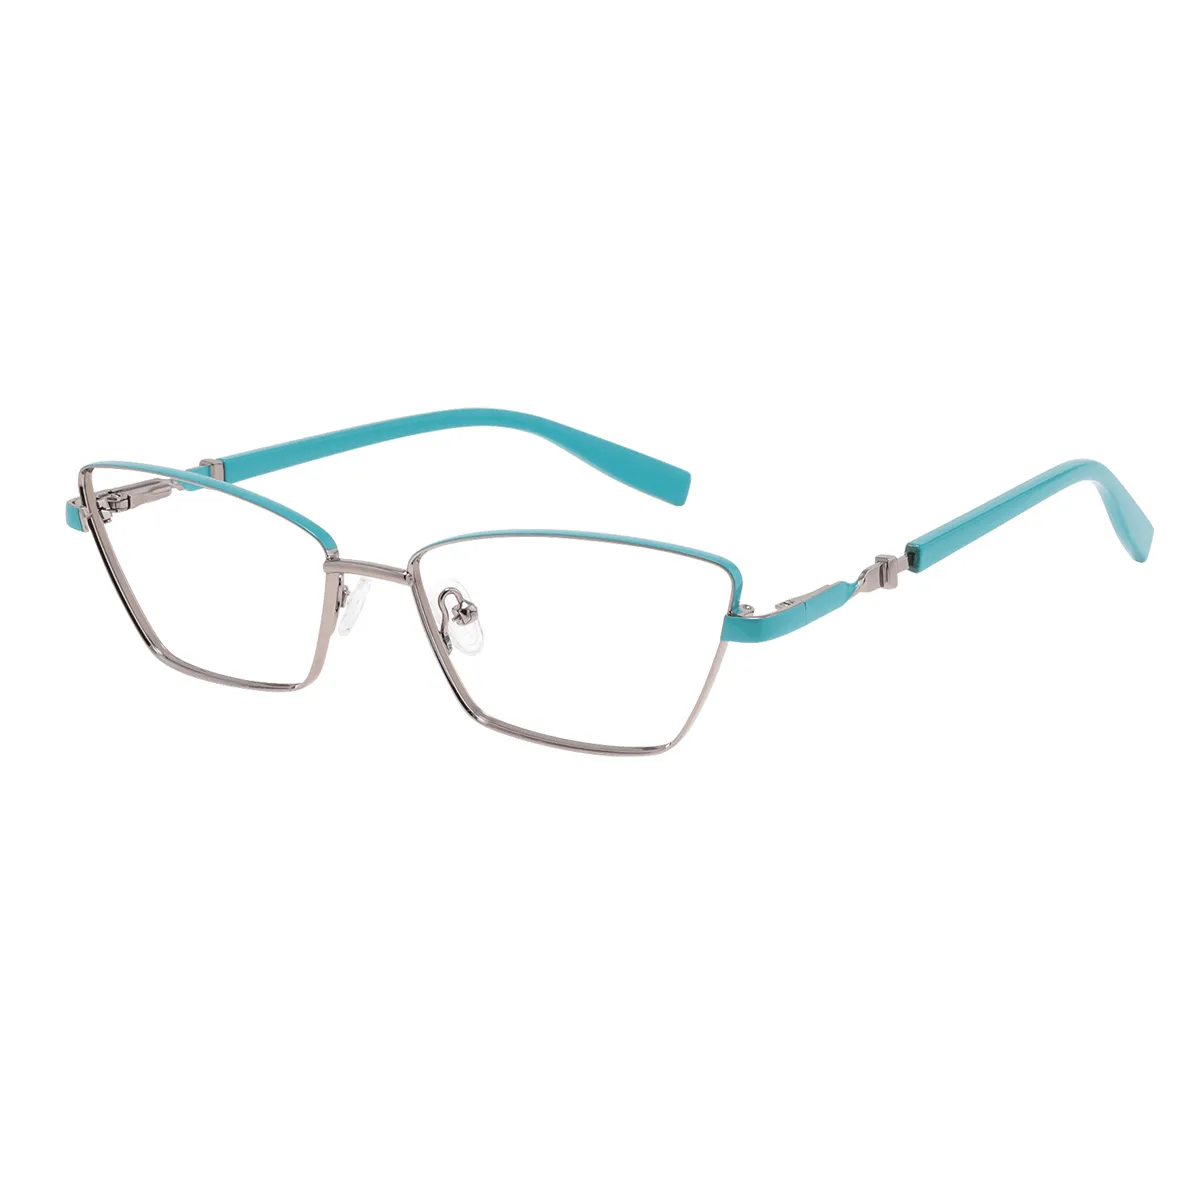 Gwenda - Cat-eye Silver-Green Glasses for Women